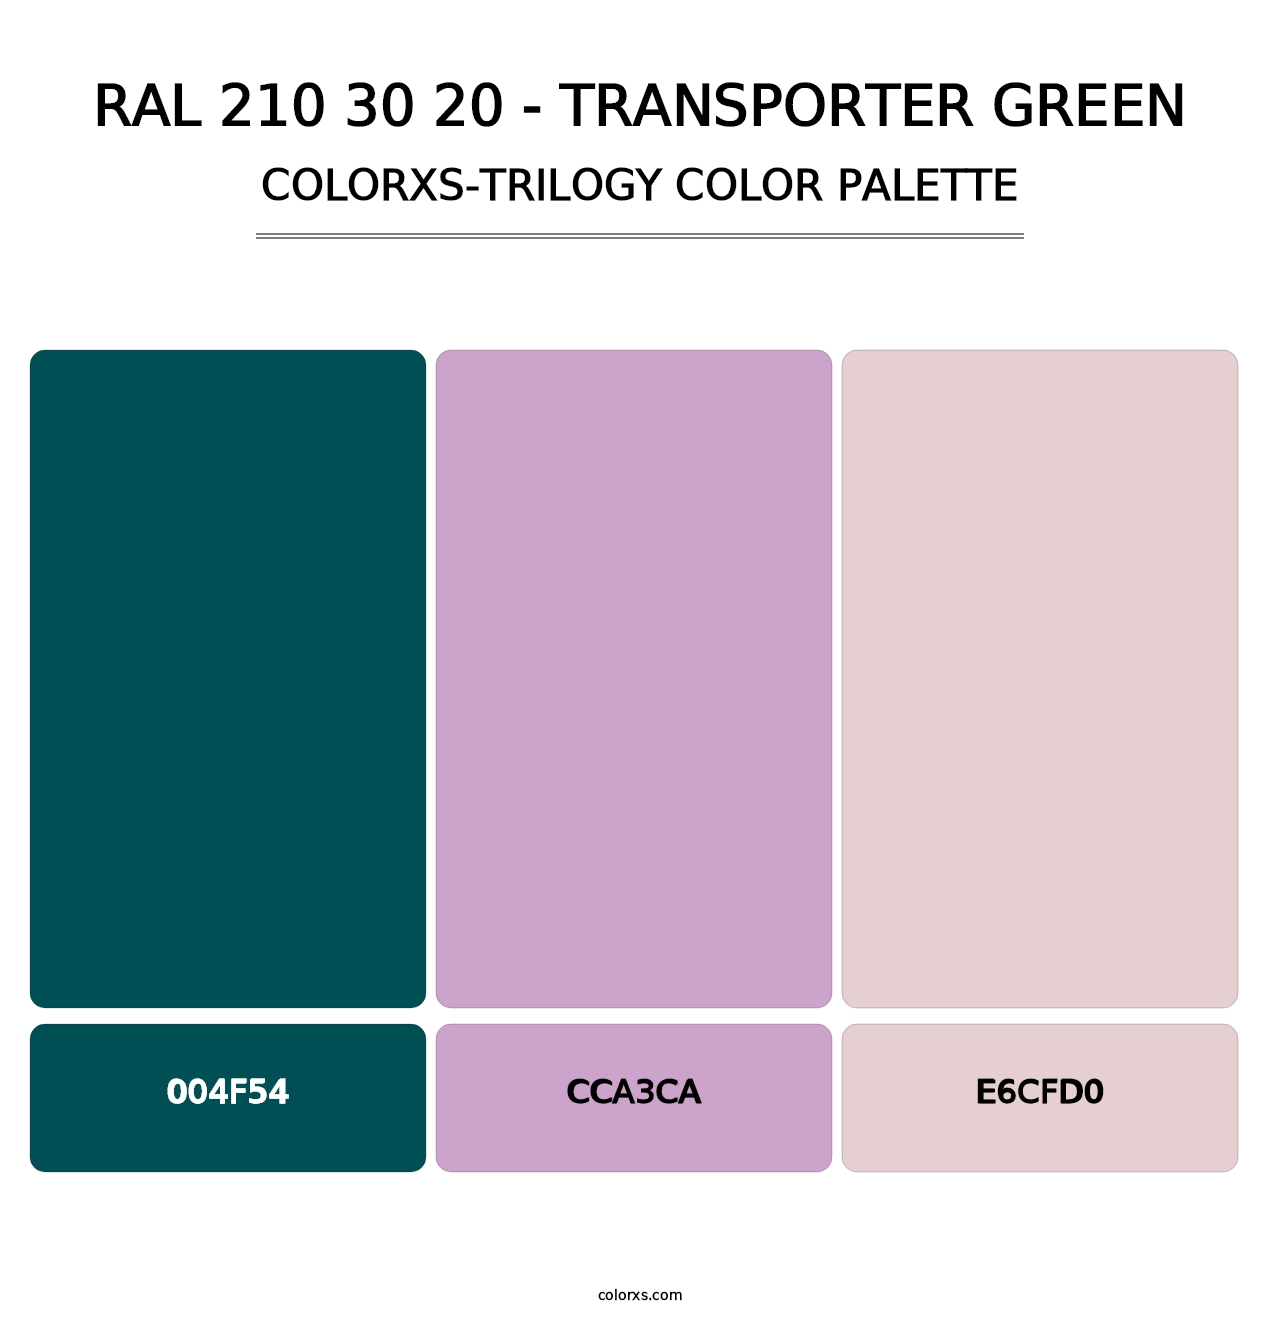 RAL 210 30 20 - Transporter Green - Colorxs Trilogy Palette